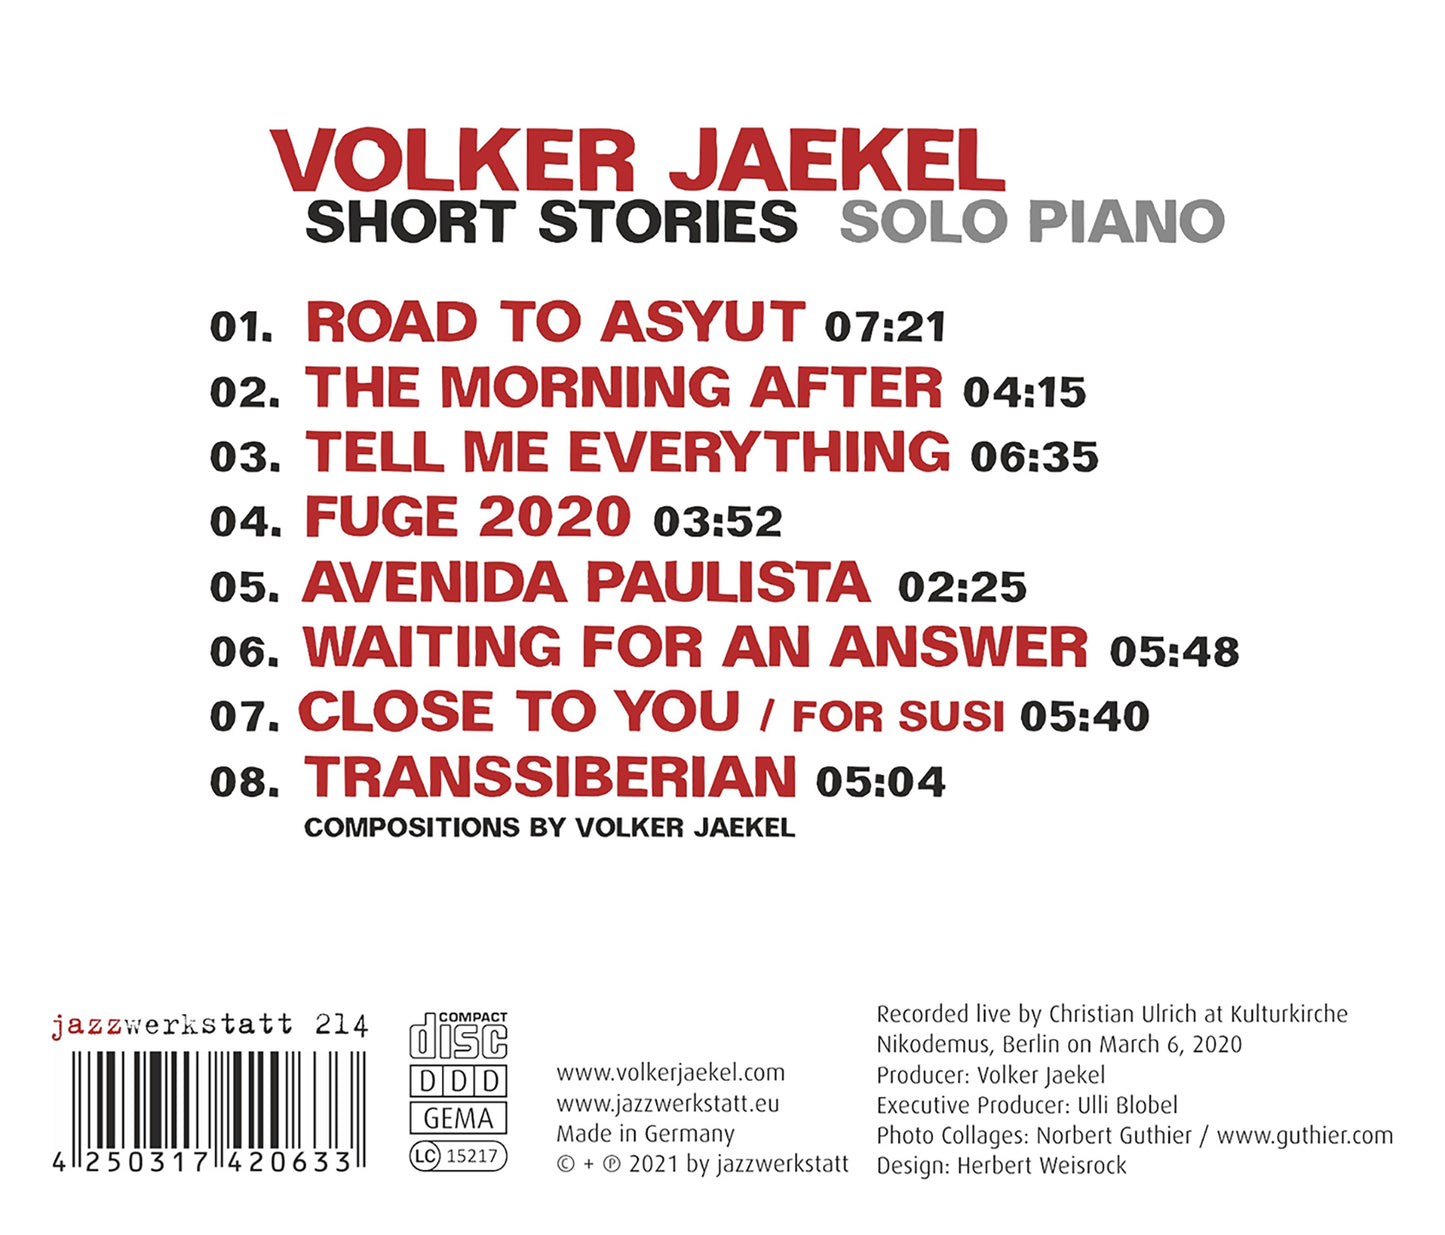 Jaekel: Short Stories